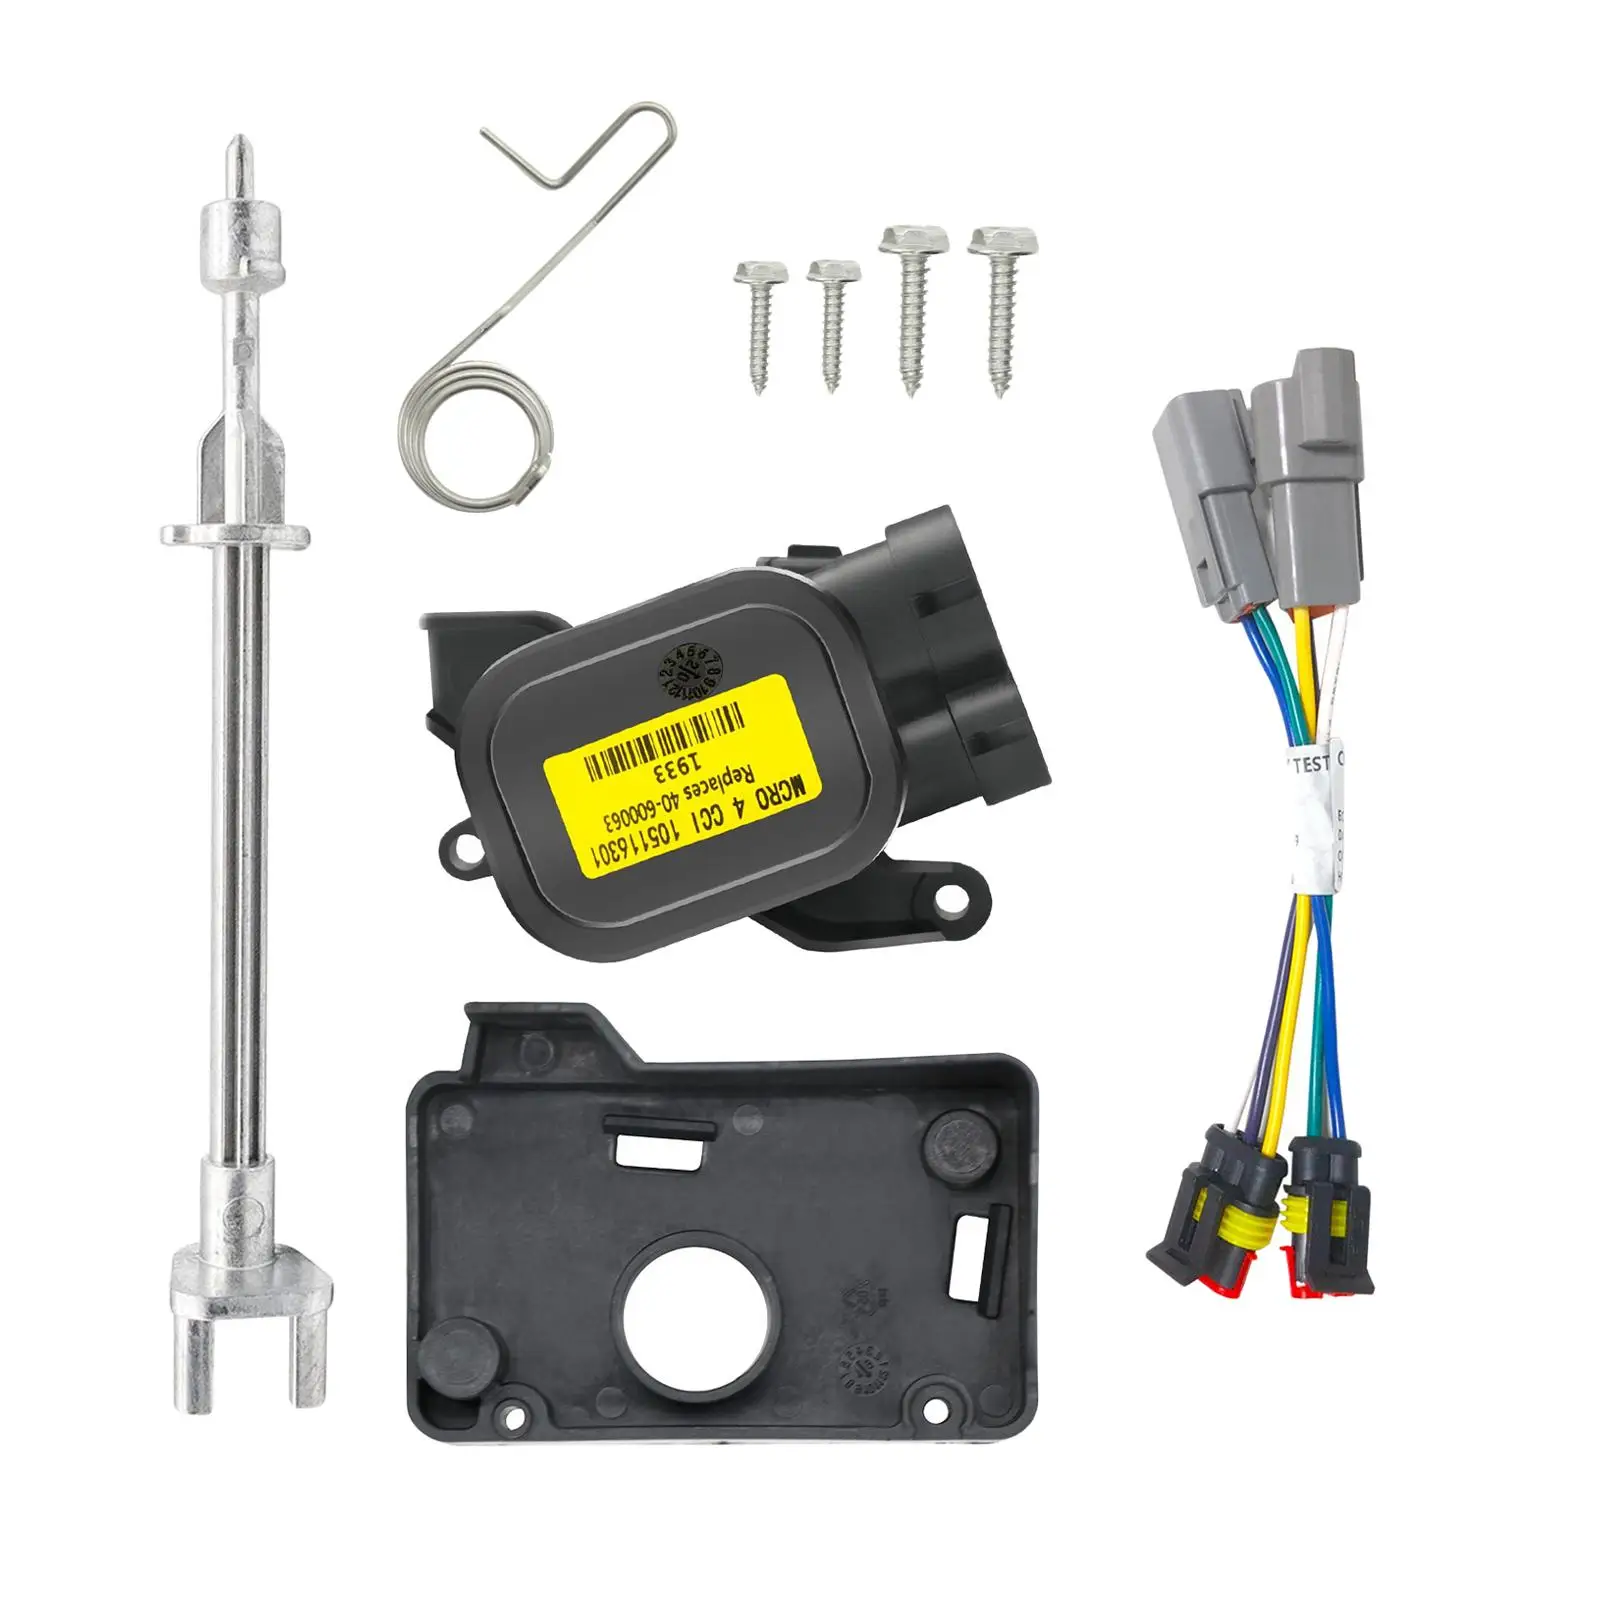 

Conversion Throttle Potentiometer Kit Replaces Durable Car Accessories AM293101 Black for Mcor4 Precedent Golf Carts